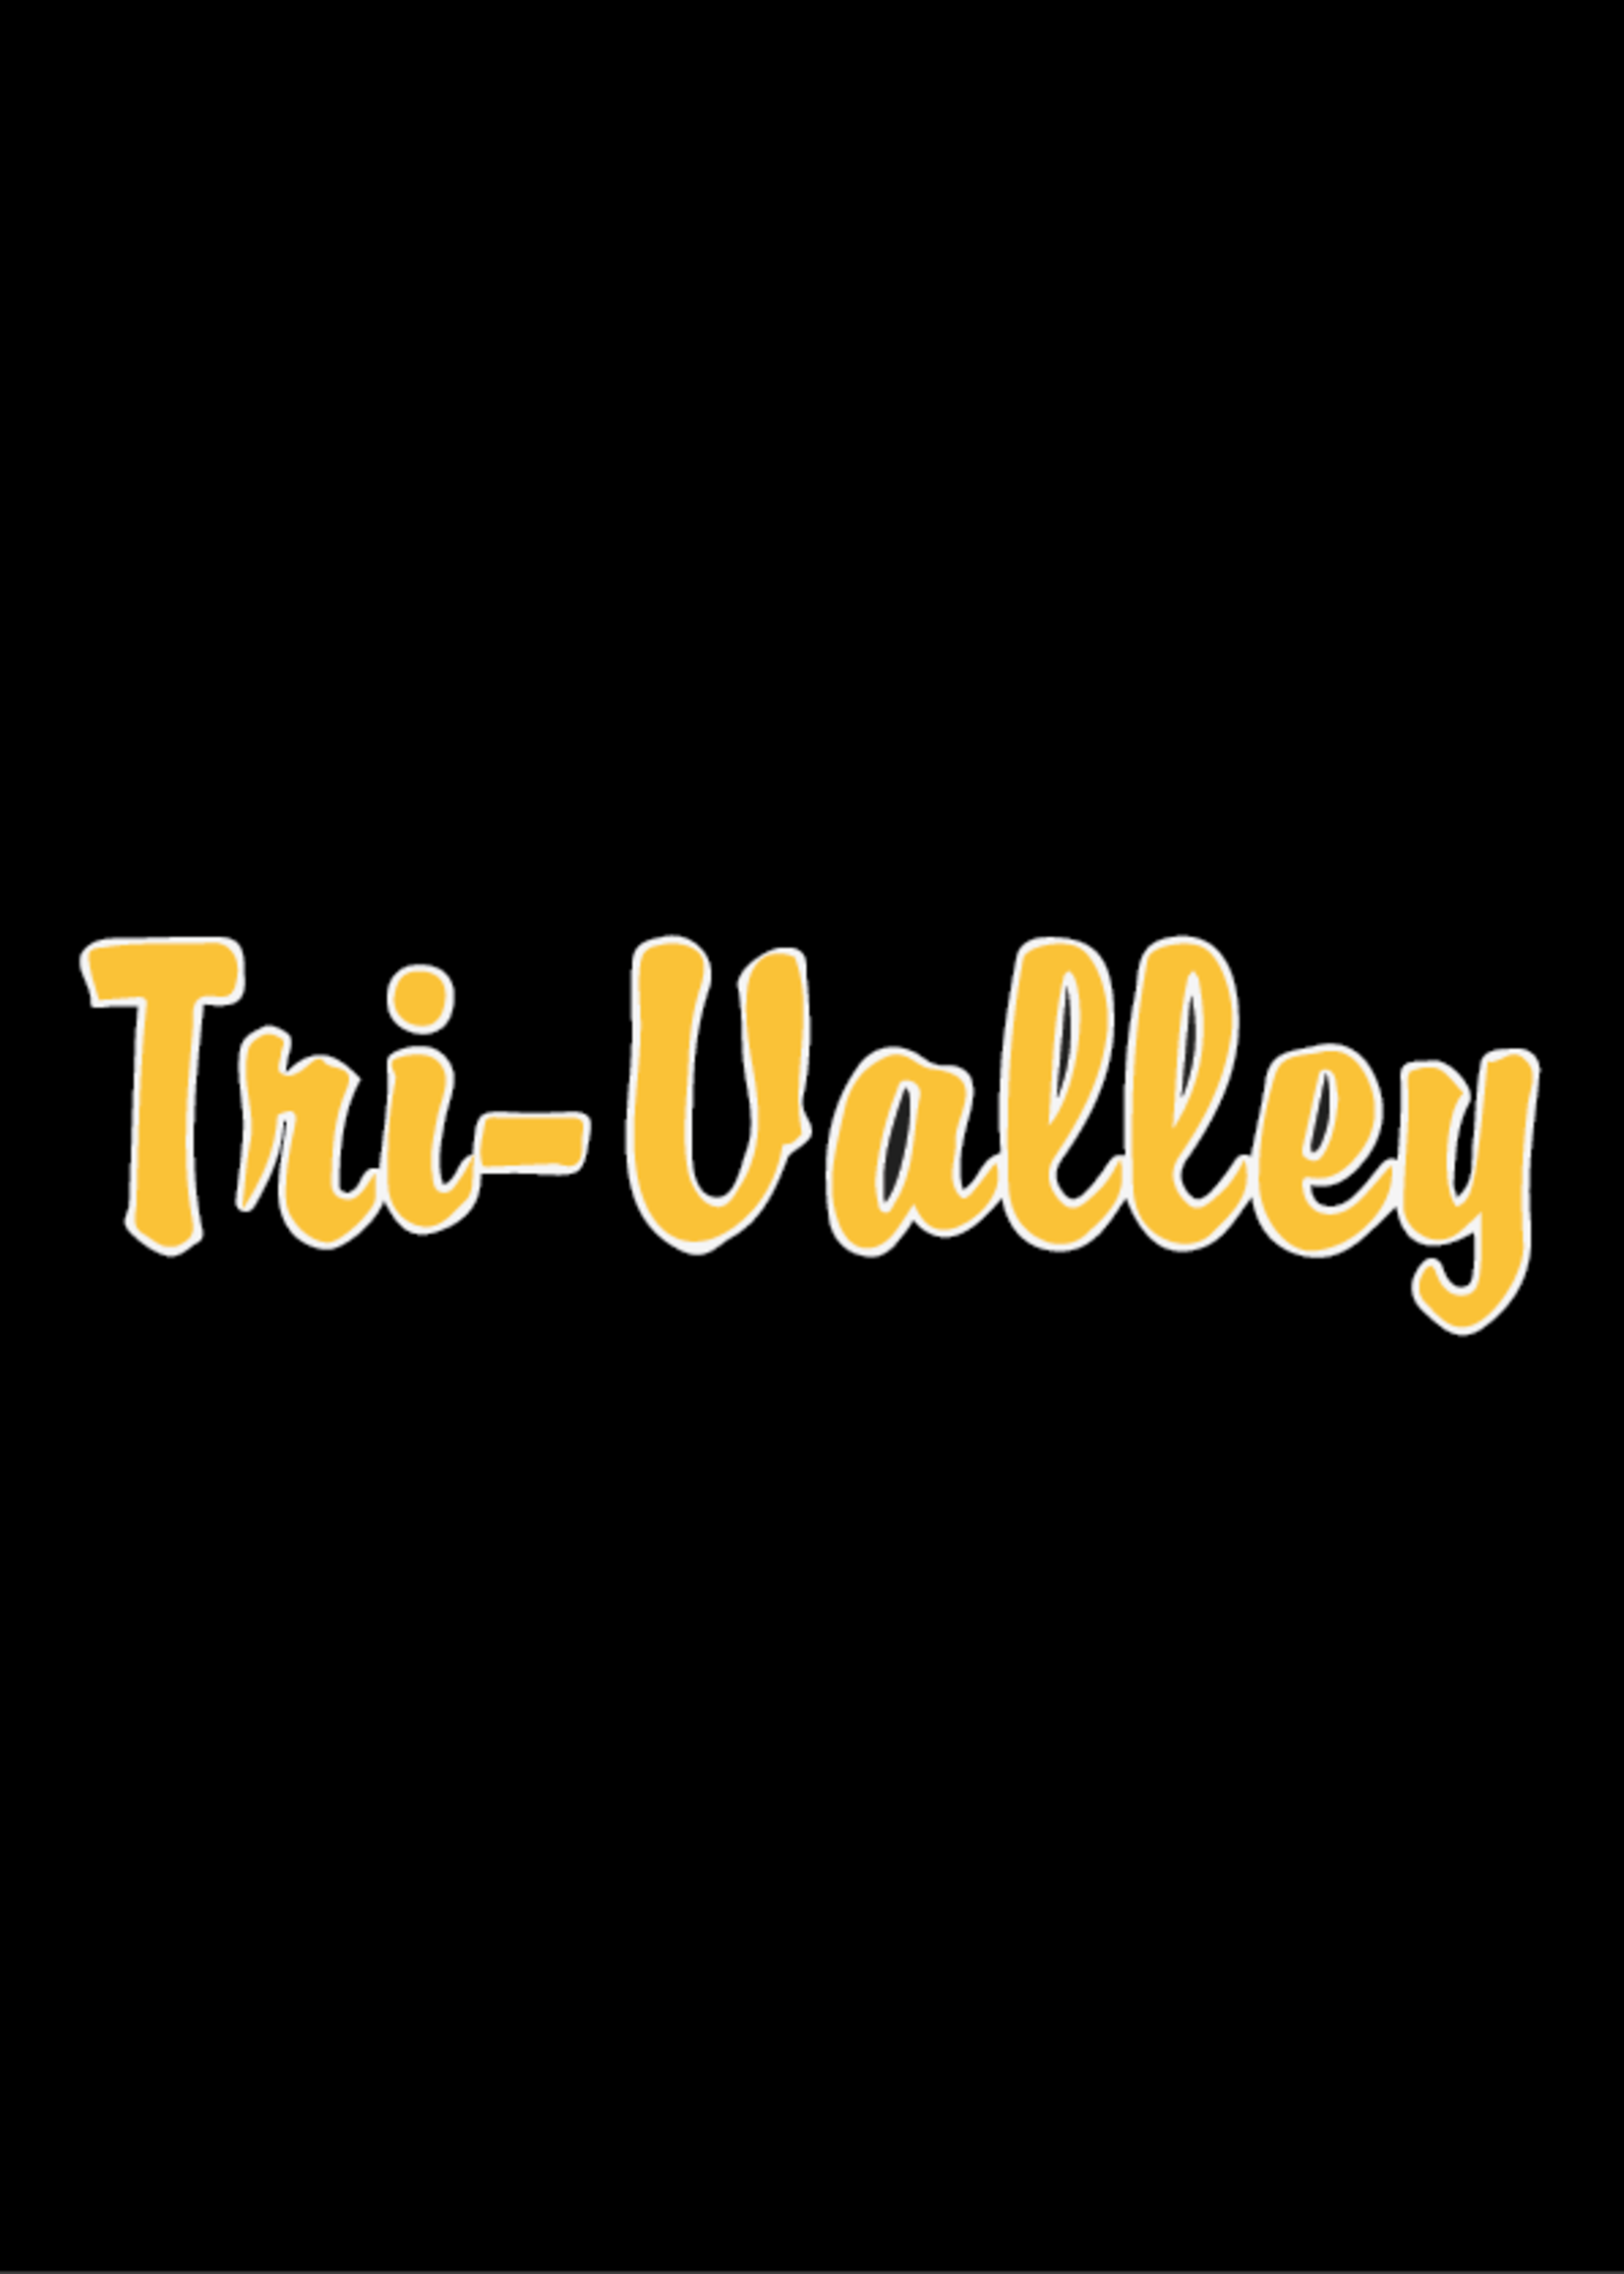 Tri Valley High School Suit Logo